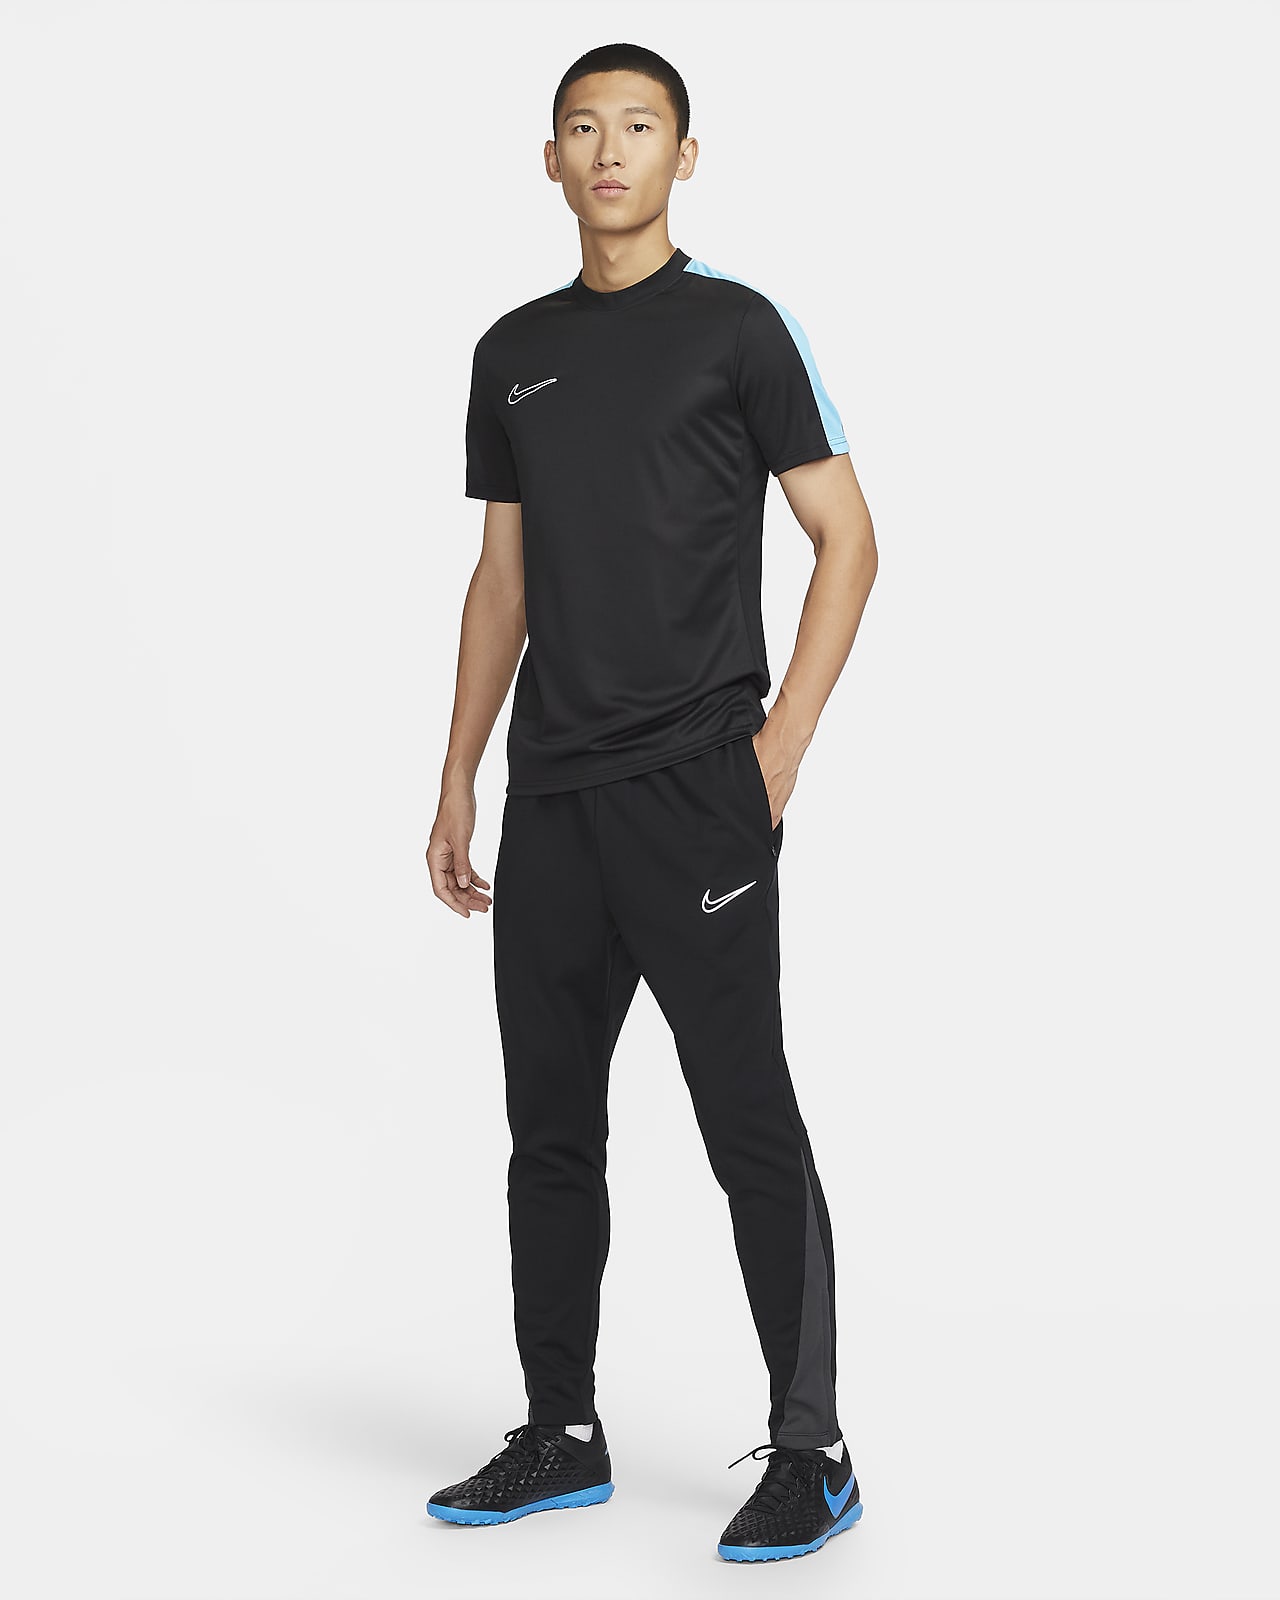 Nike Academy Winter Warrior Football Pants - Black